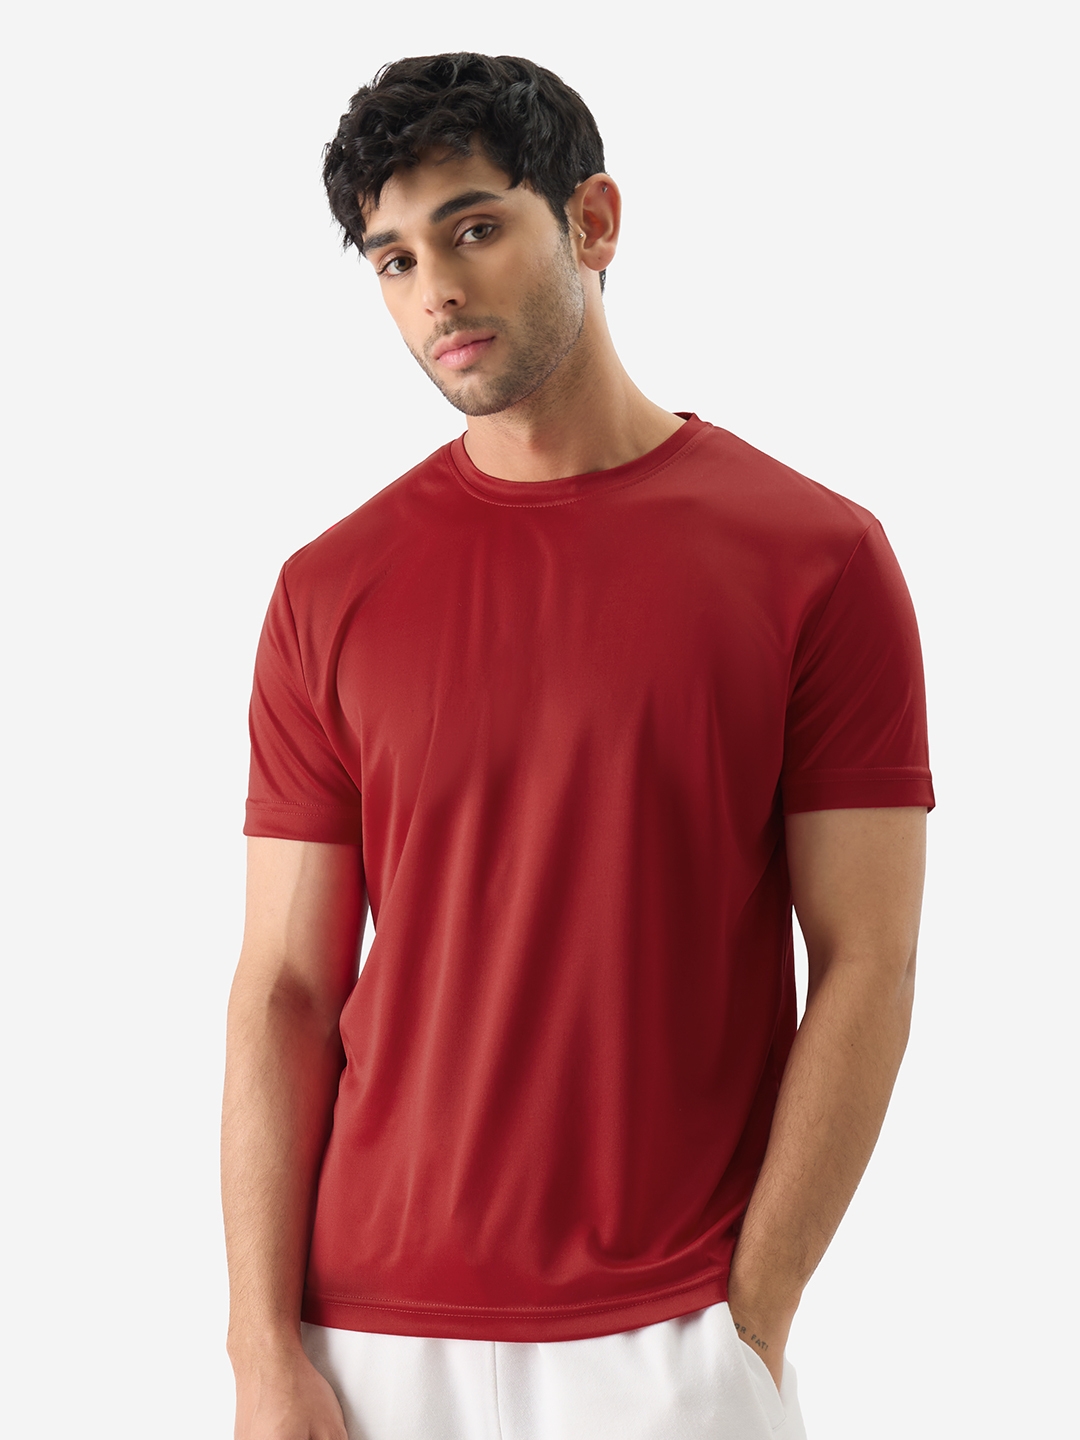 Men's Solids: Red T-Shirt